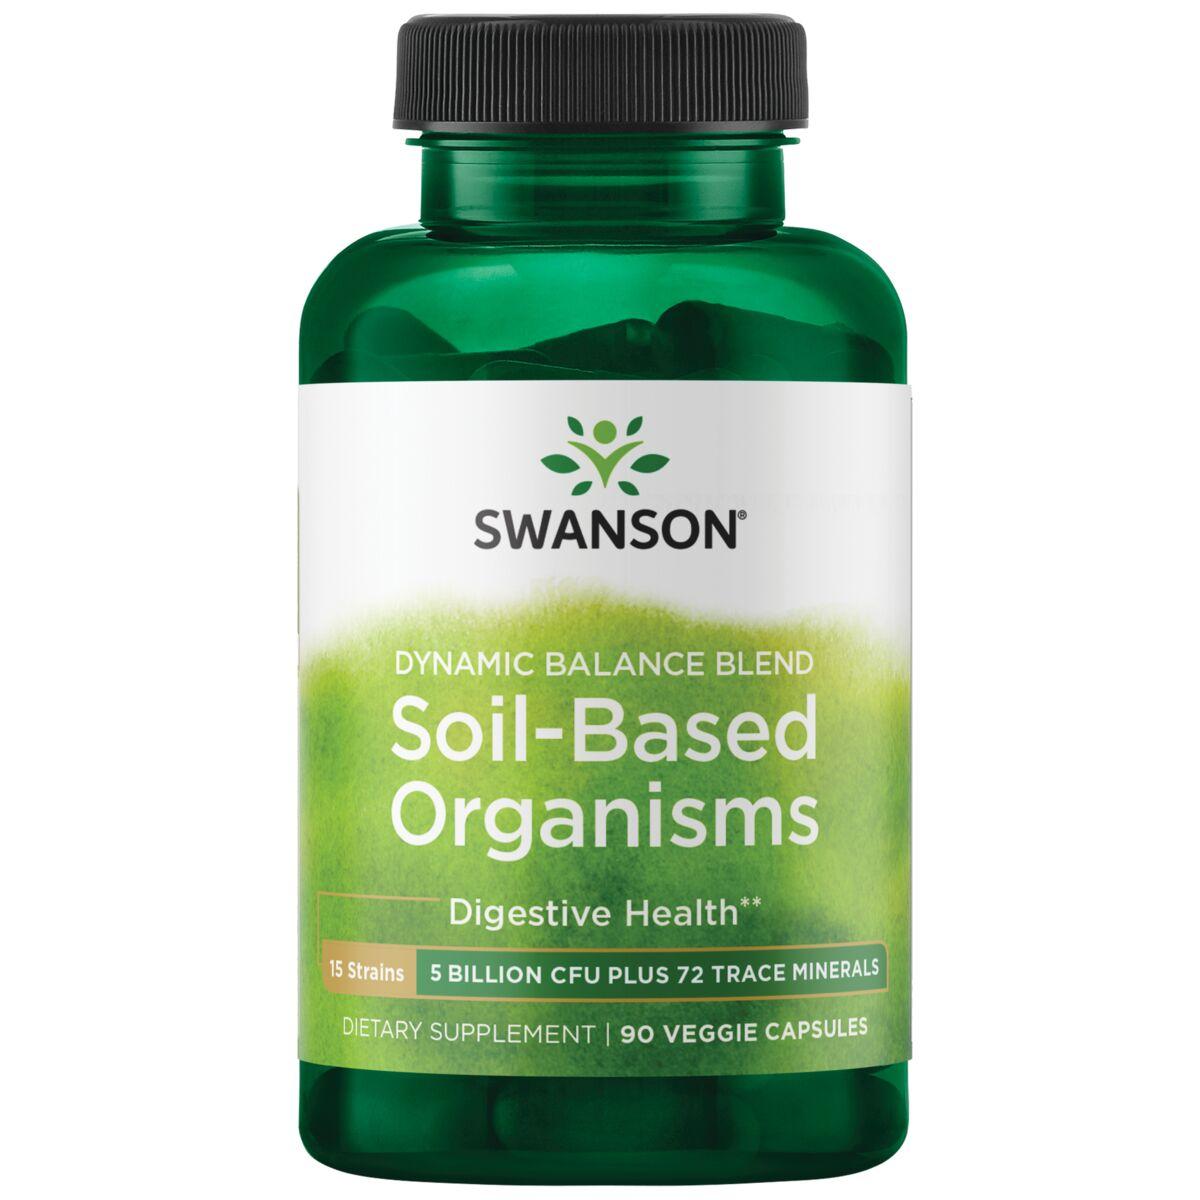 Swanson Ultra Dynamic Balanced Blend Soil-Based Organisms Supplement Vitamin | 5 Billion CFU | 90 Veg Caps | Probiotics